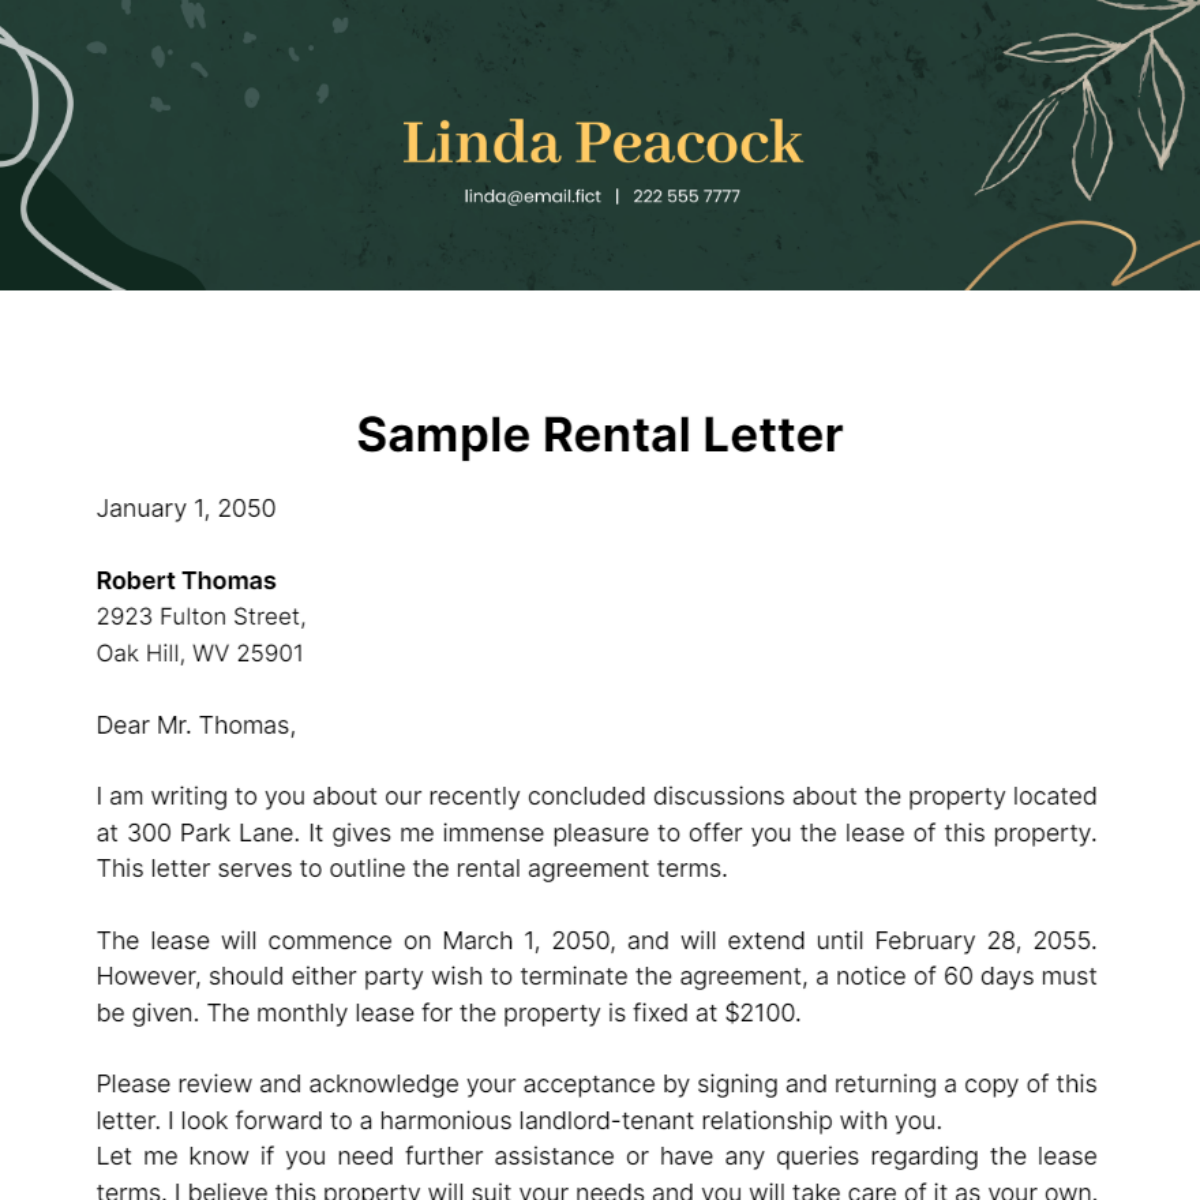 Sample Rental Letter Template